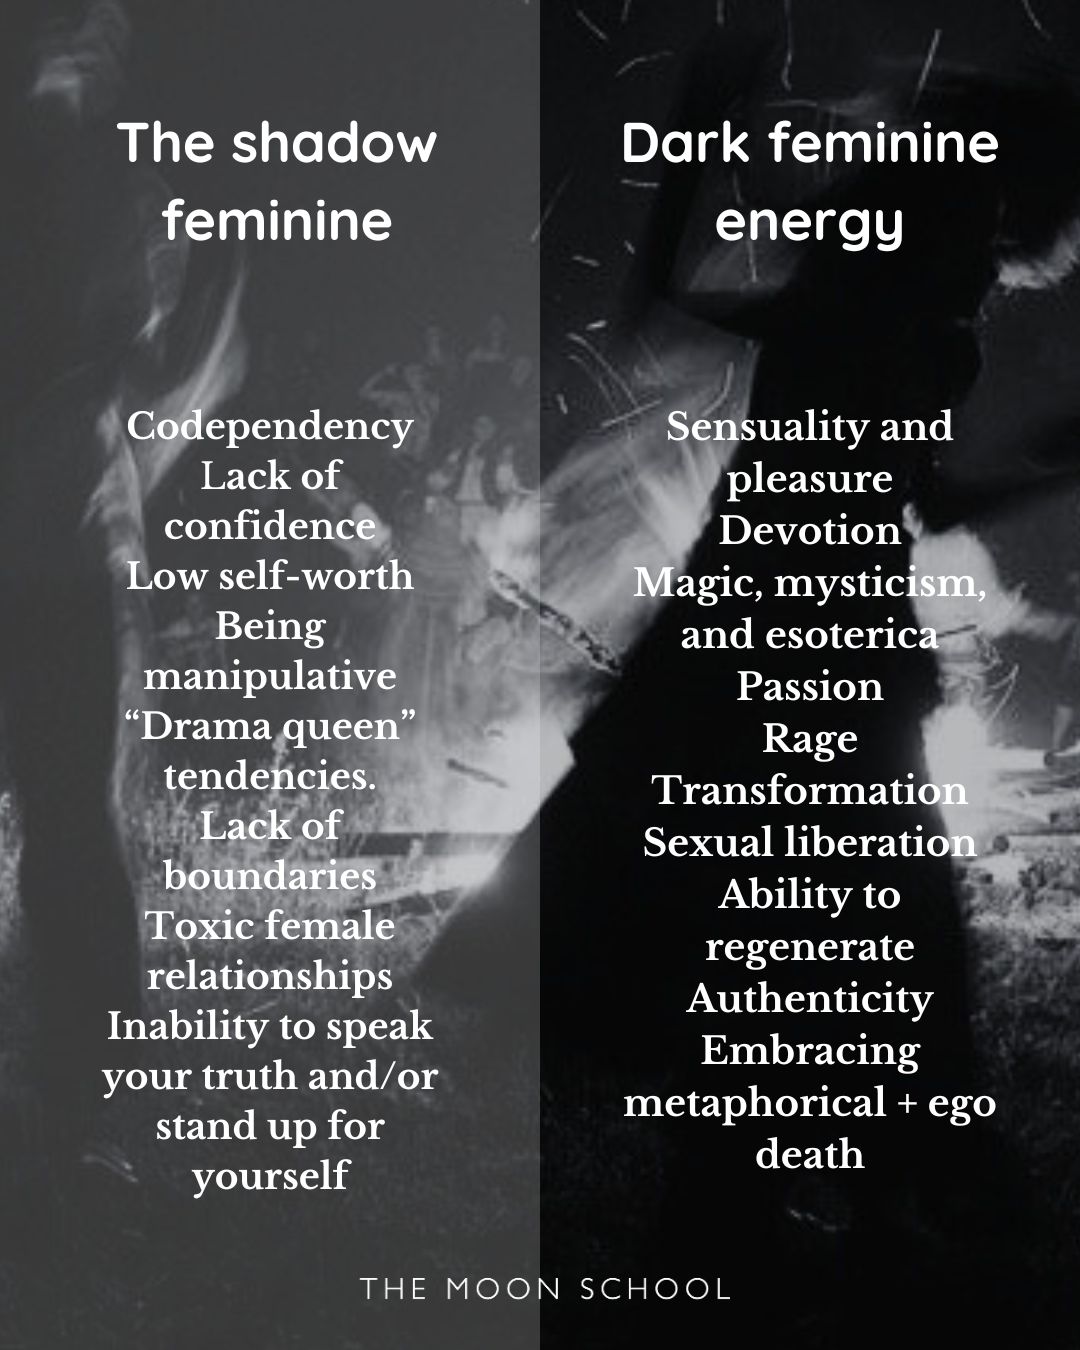 Infographic showing shadow feminine vs dark feminine